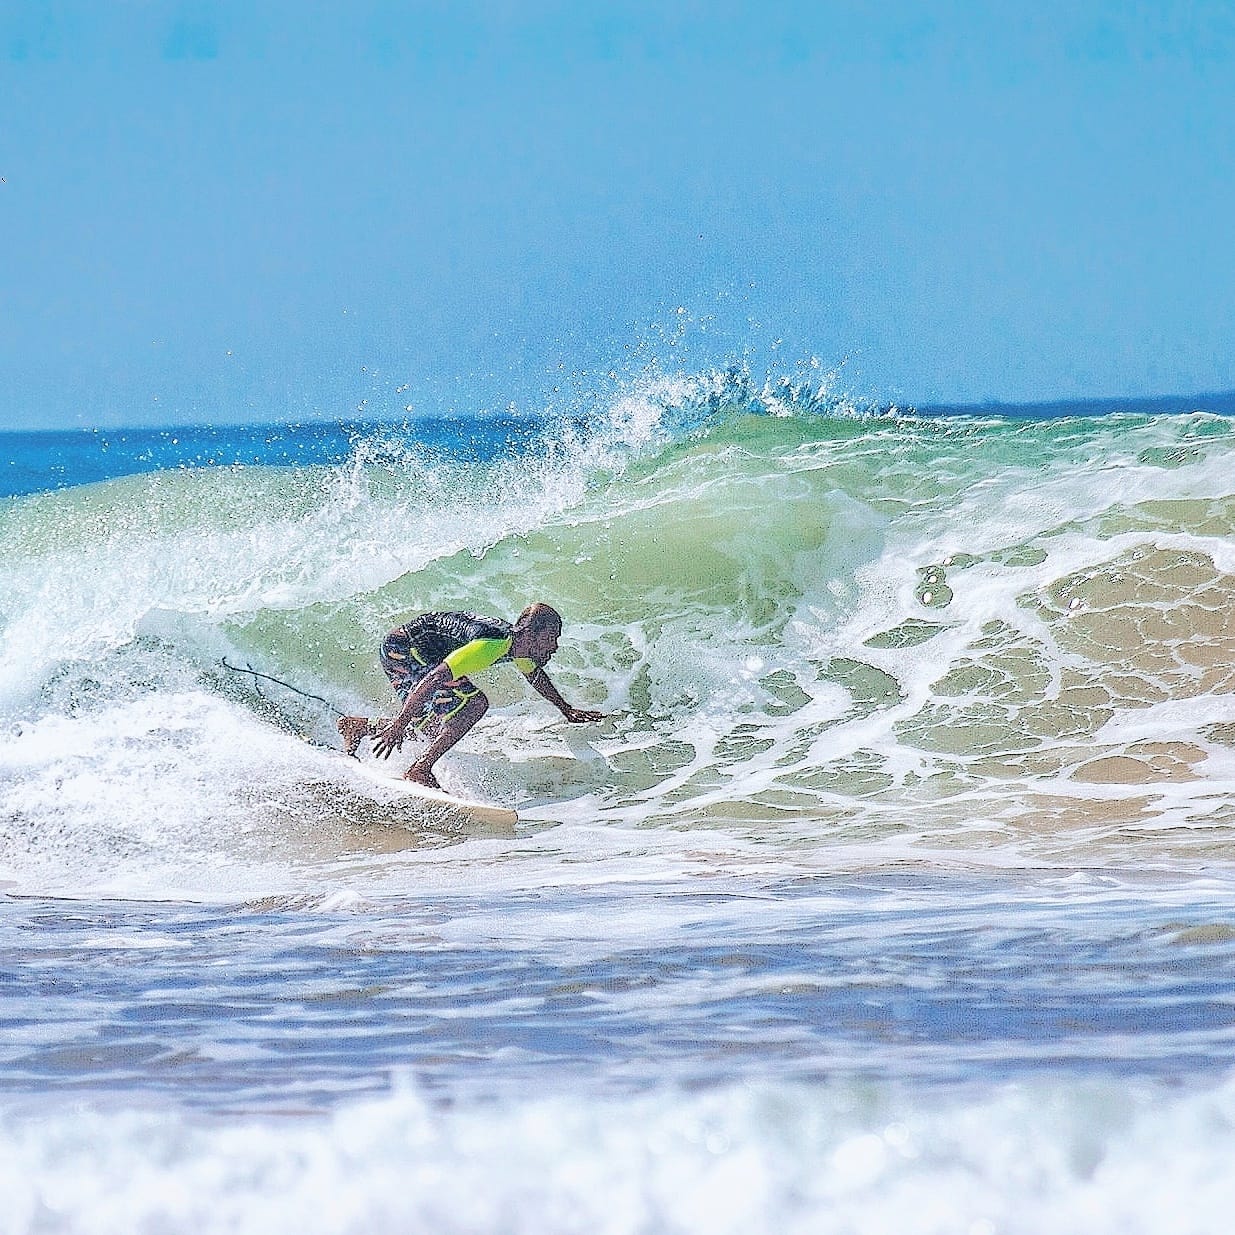 Surfing Weligamasurf surf